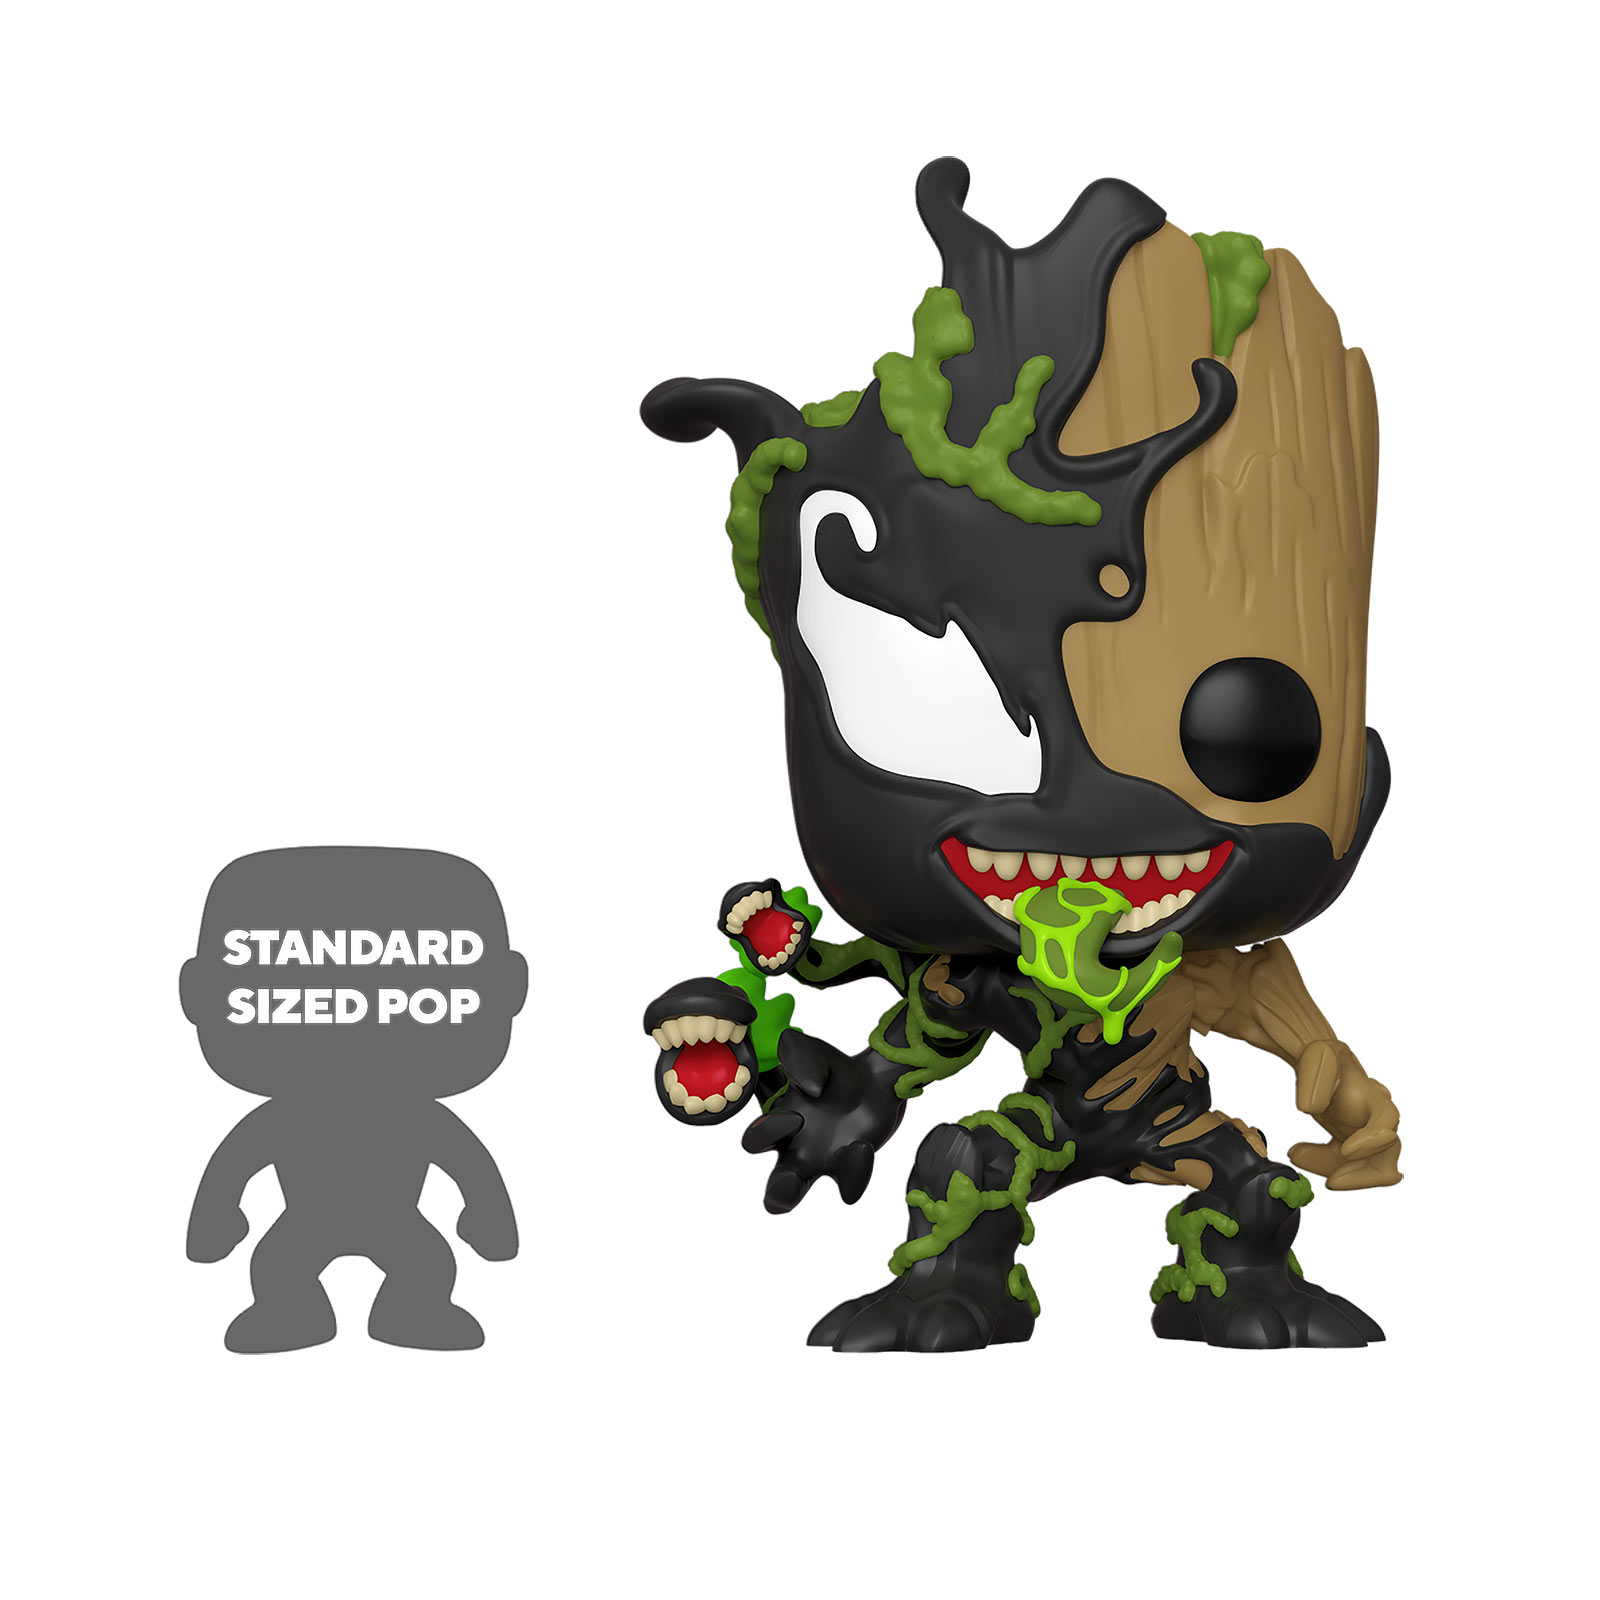 Marvel - Venomised Groot Funko Pop Bobblehead Figuur 25 cm